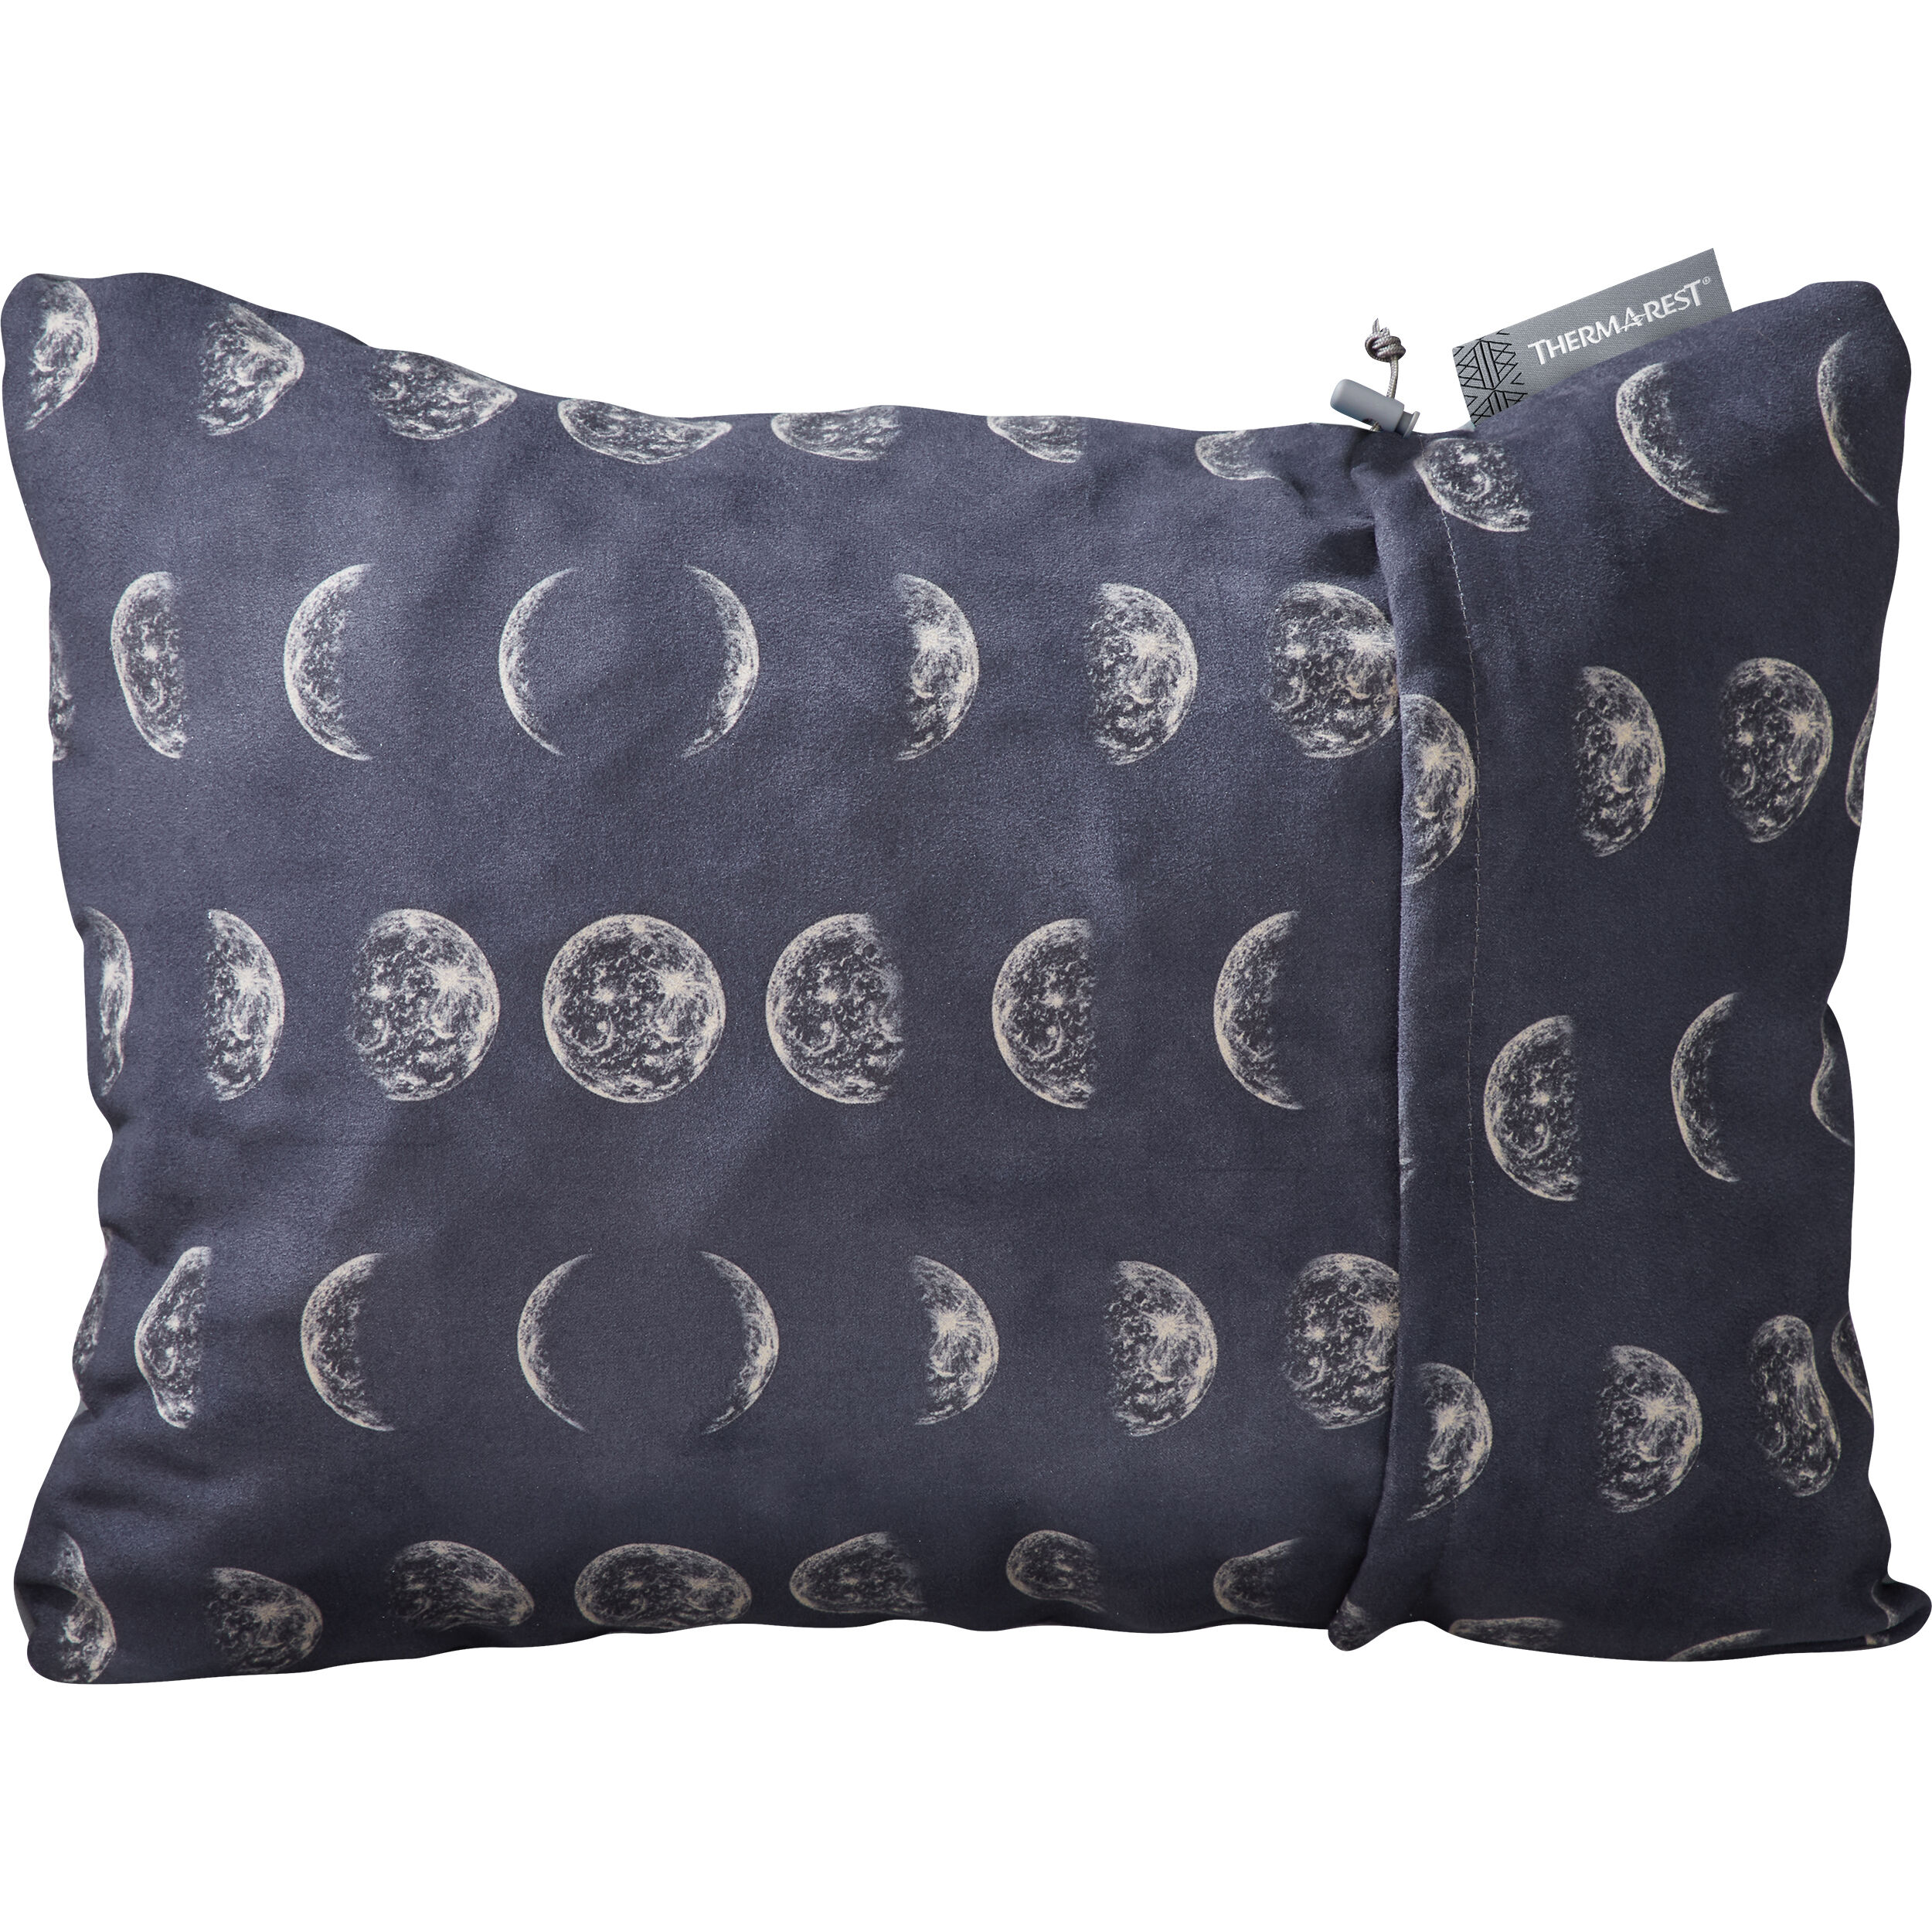 beyond the moon pillows